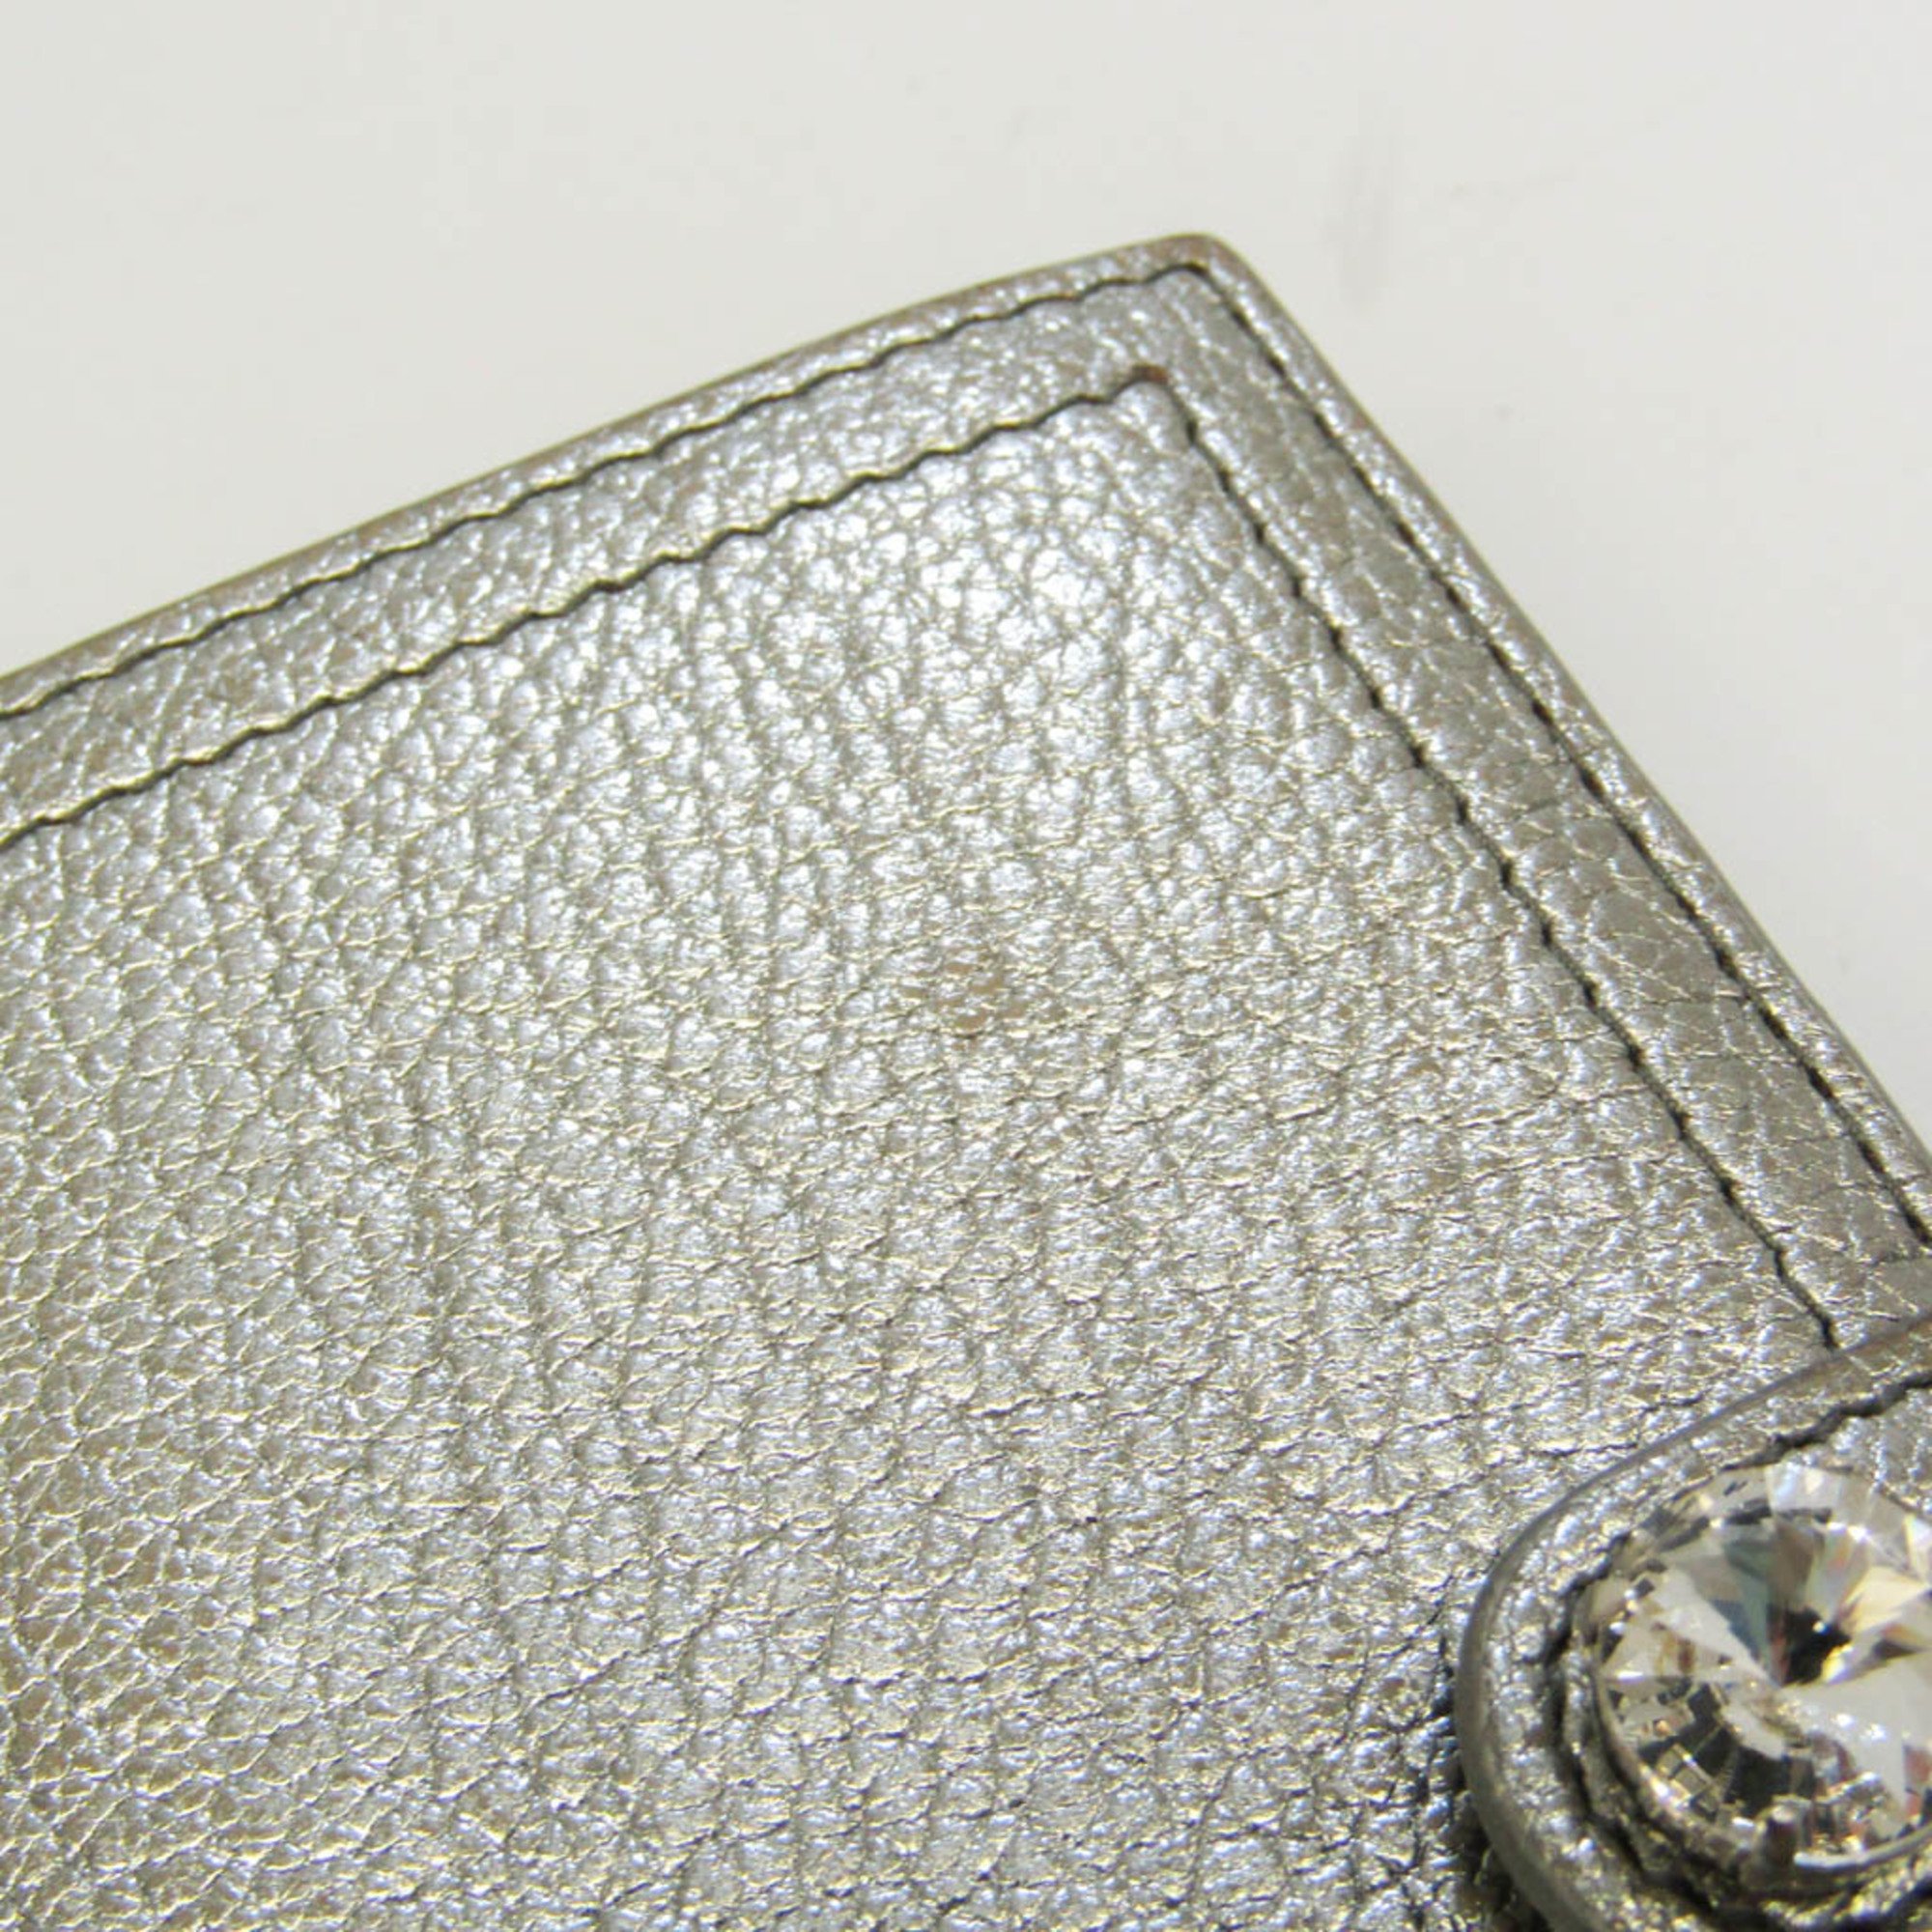 Miu Miu Women's Leather Card Wallet Silver